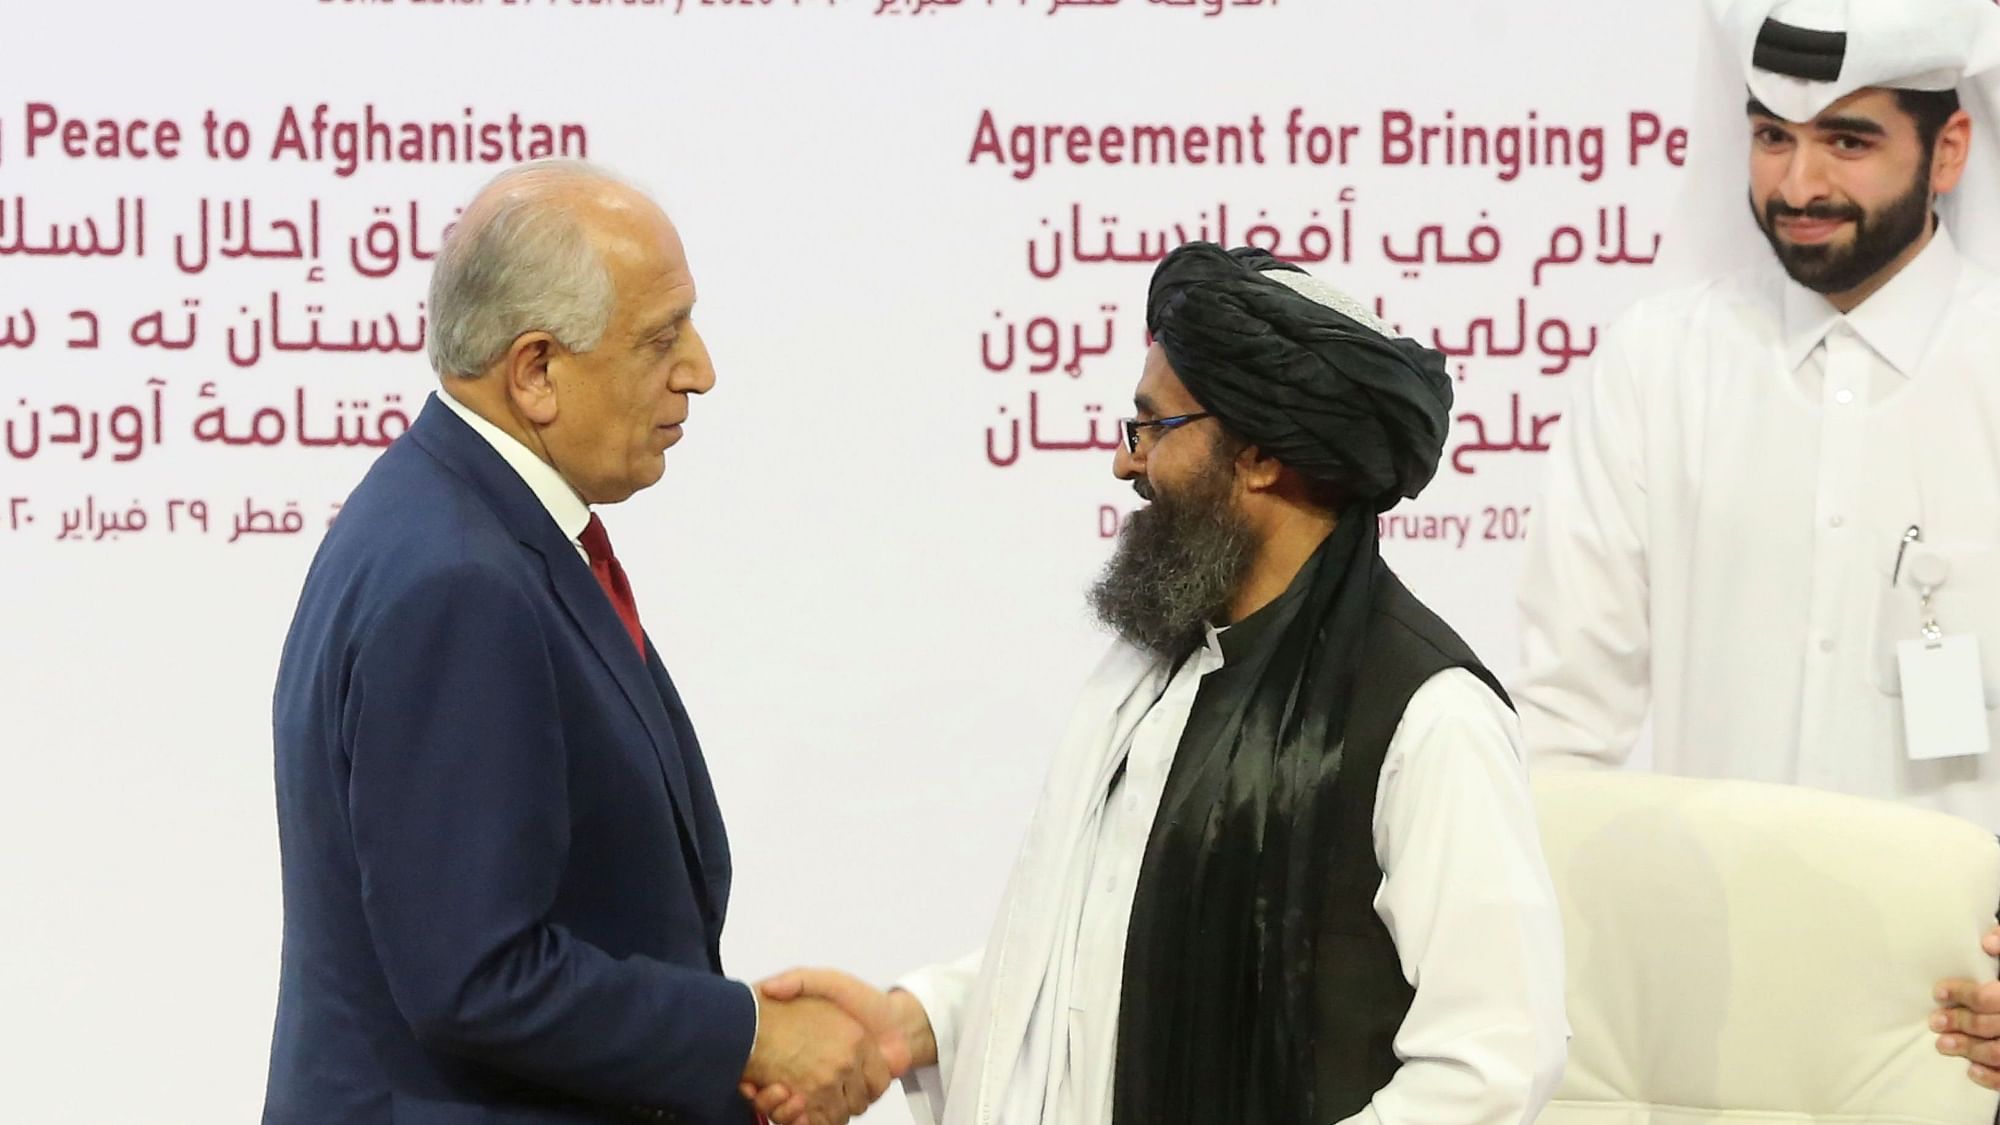 US peace envoy Zalmay Khalilzad, left, and Mullah Abdul Ghani Baradar, the Taliban group’s top political leader shake hands after signing a peace agreement between Taliban and US officials in Doha, Qatar, Saturday, 29 Feb 2020.